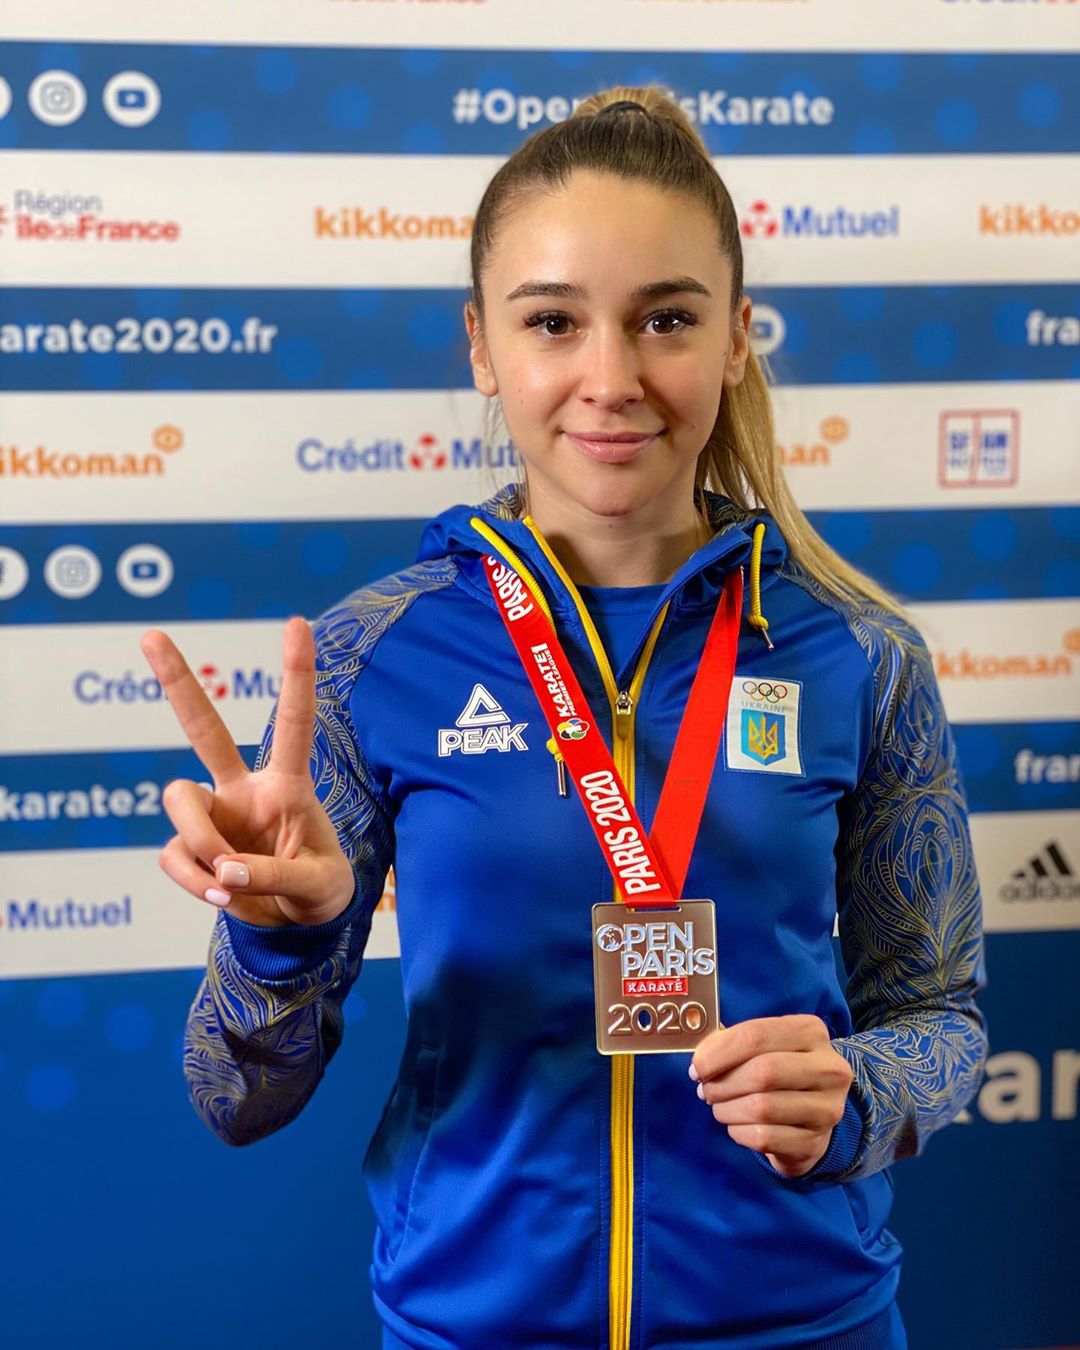 Каратистка Анжелика Терлюга заняла 2-е место на этапе Karate1 Premier League